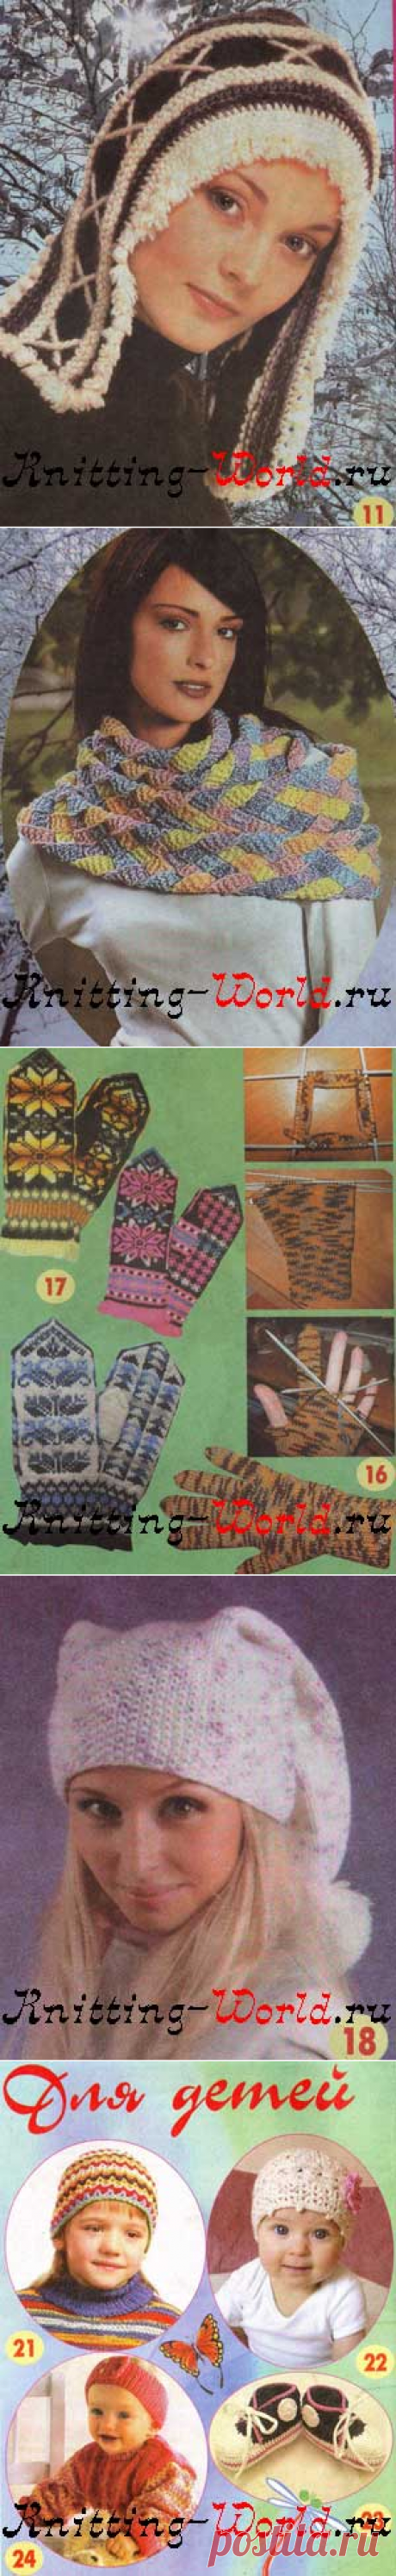 Журнал Вязание. Шапки, шарфы, варежки №1 2012 года - Мир вязания - www.Knitting-World.ru